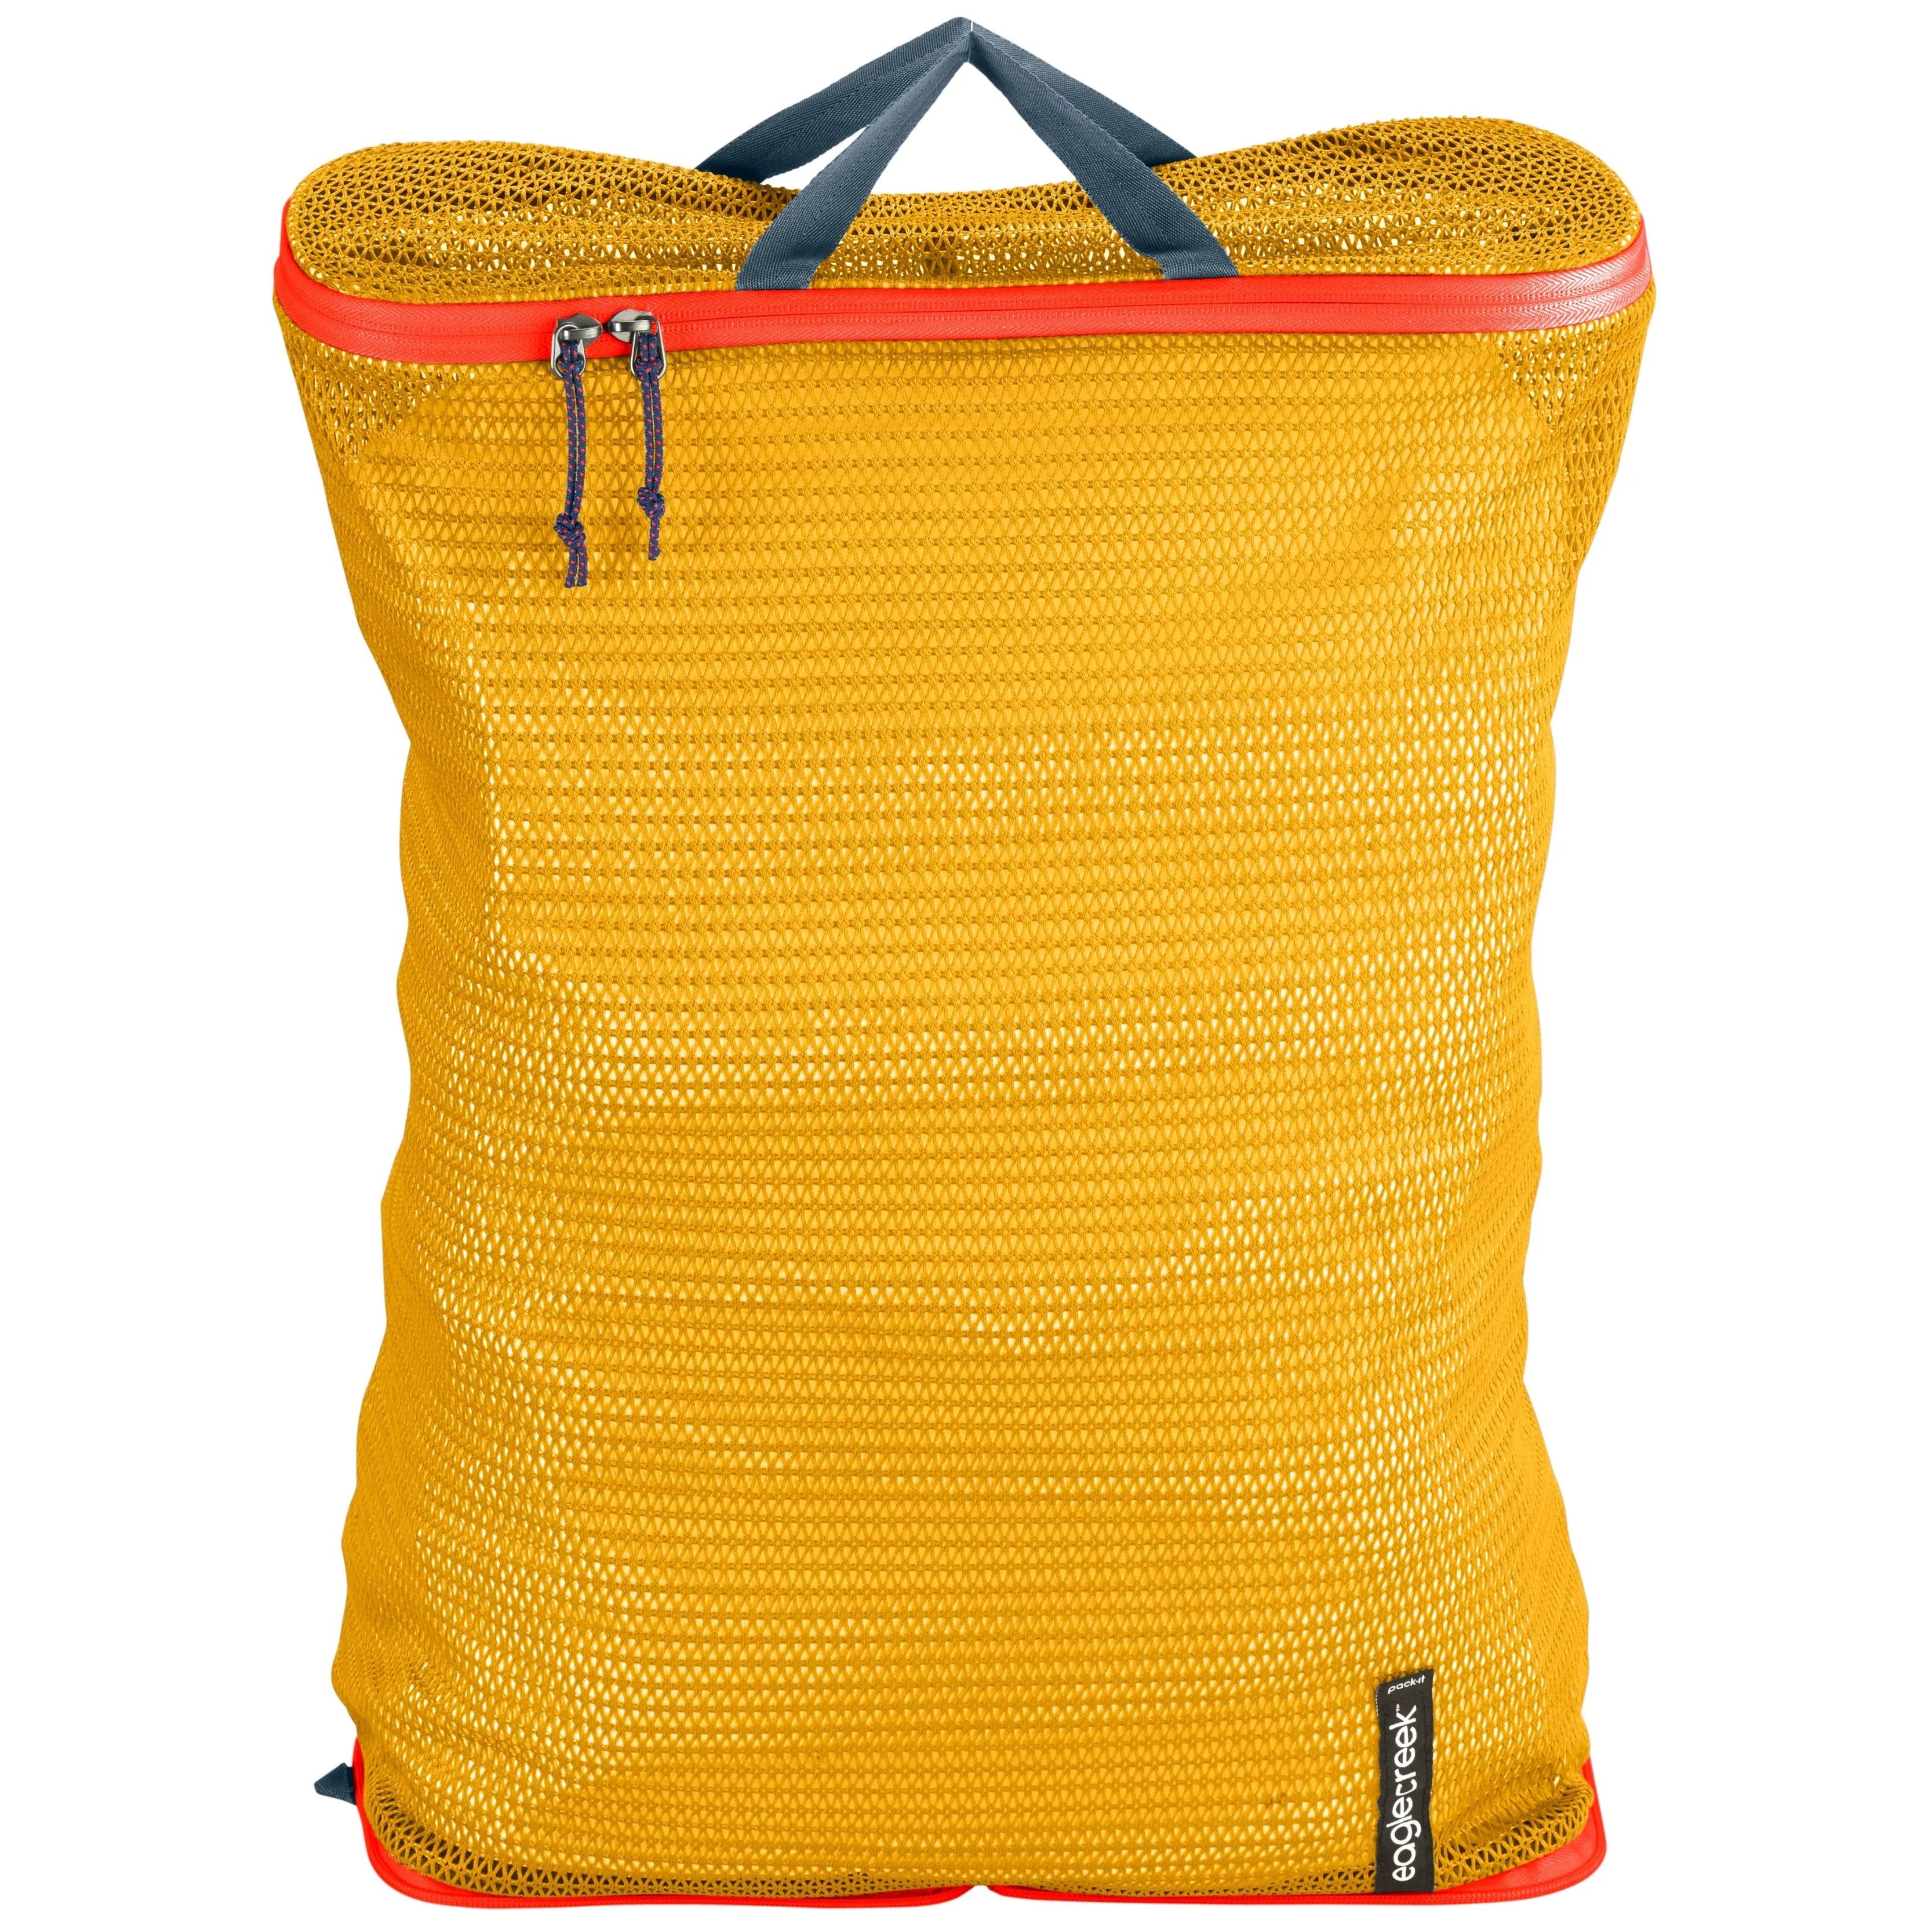 Eagle Creek Pack-It Reveal sac à linge 52 cm - jaune sahara